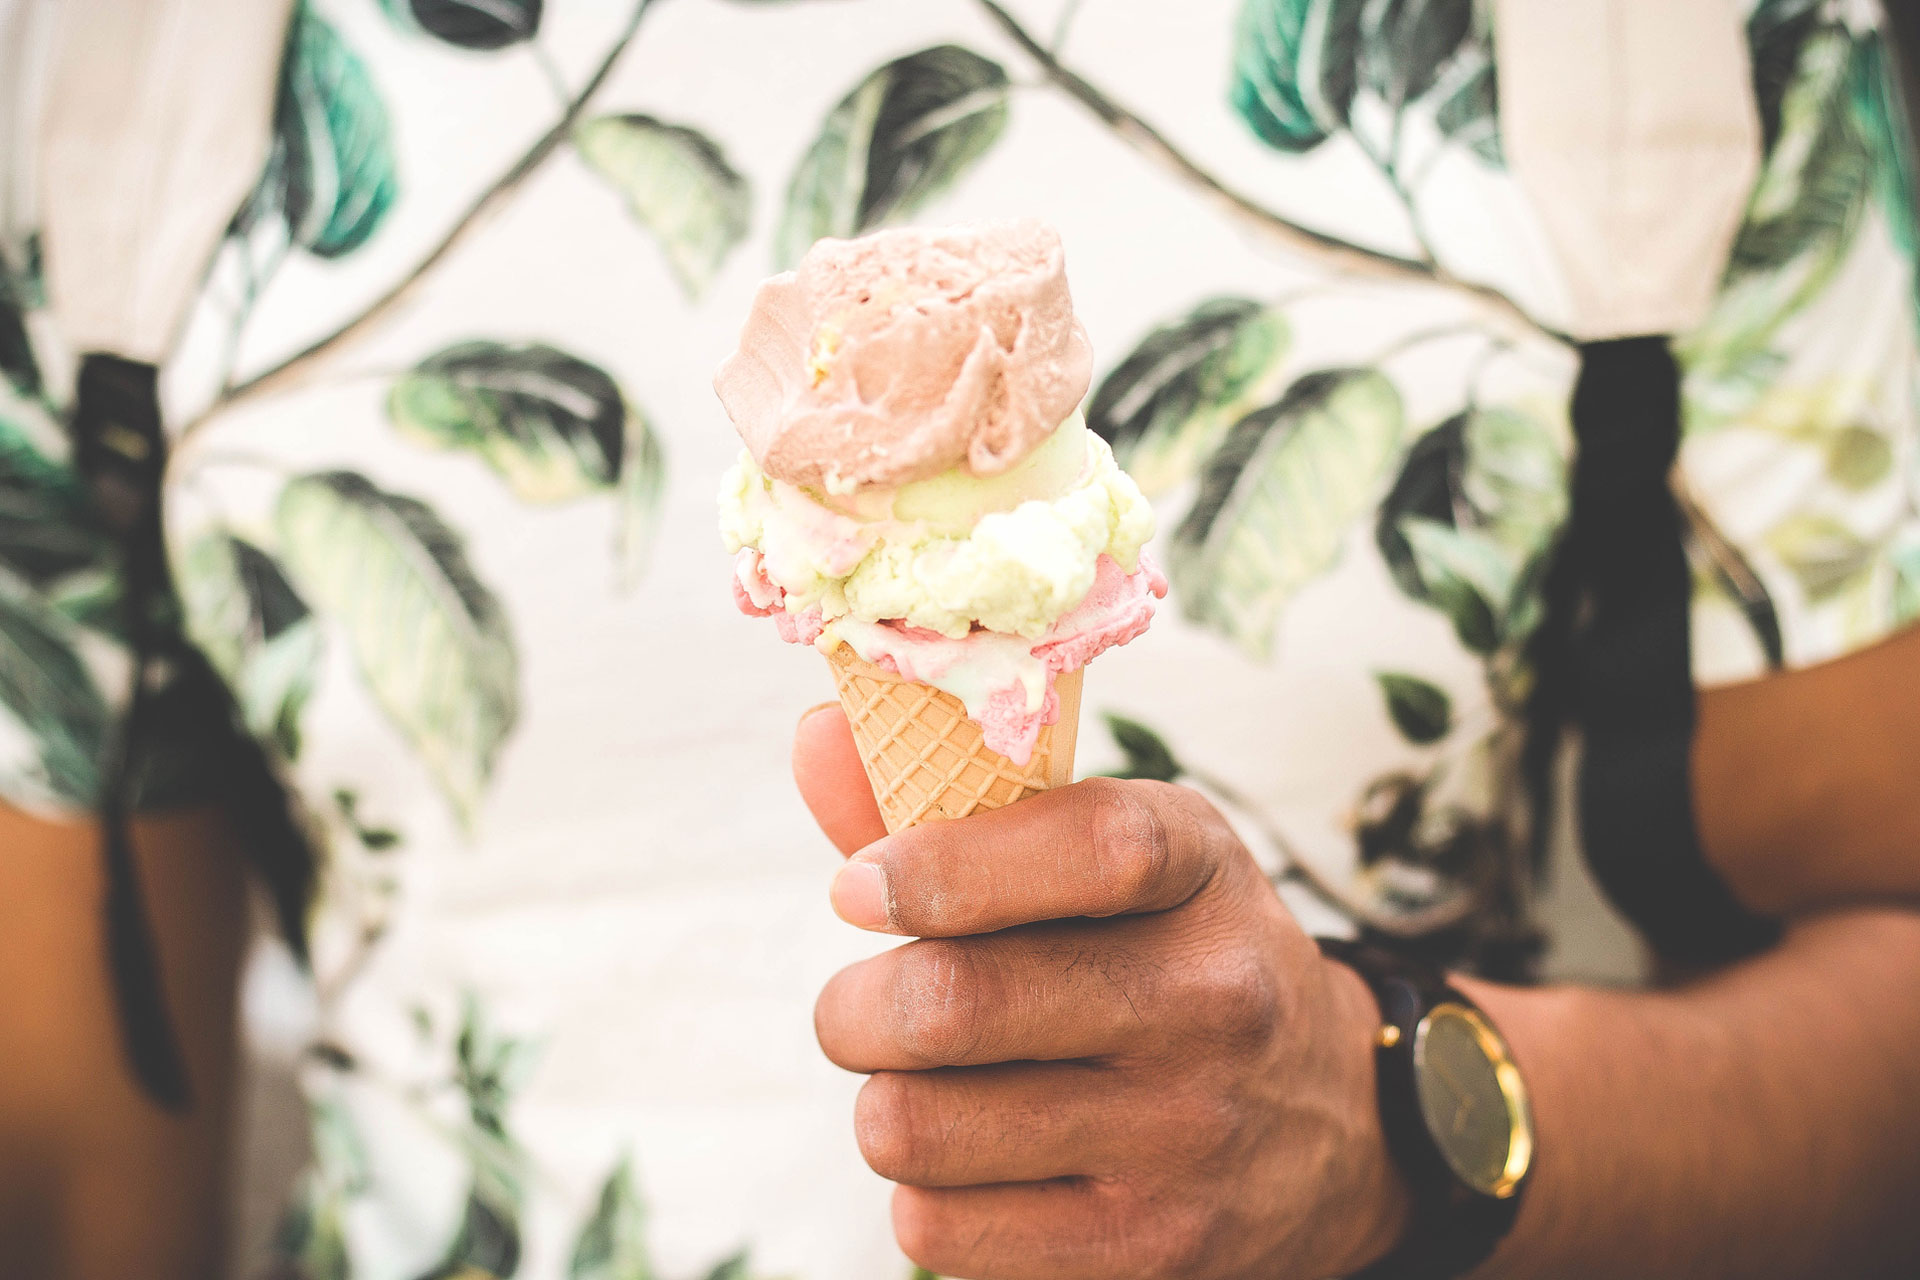 Man in a tropical shirt holding an ice cream cone